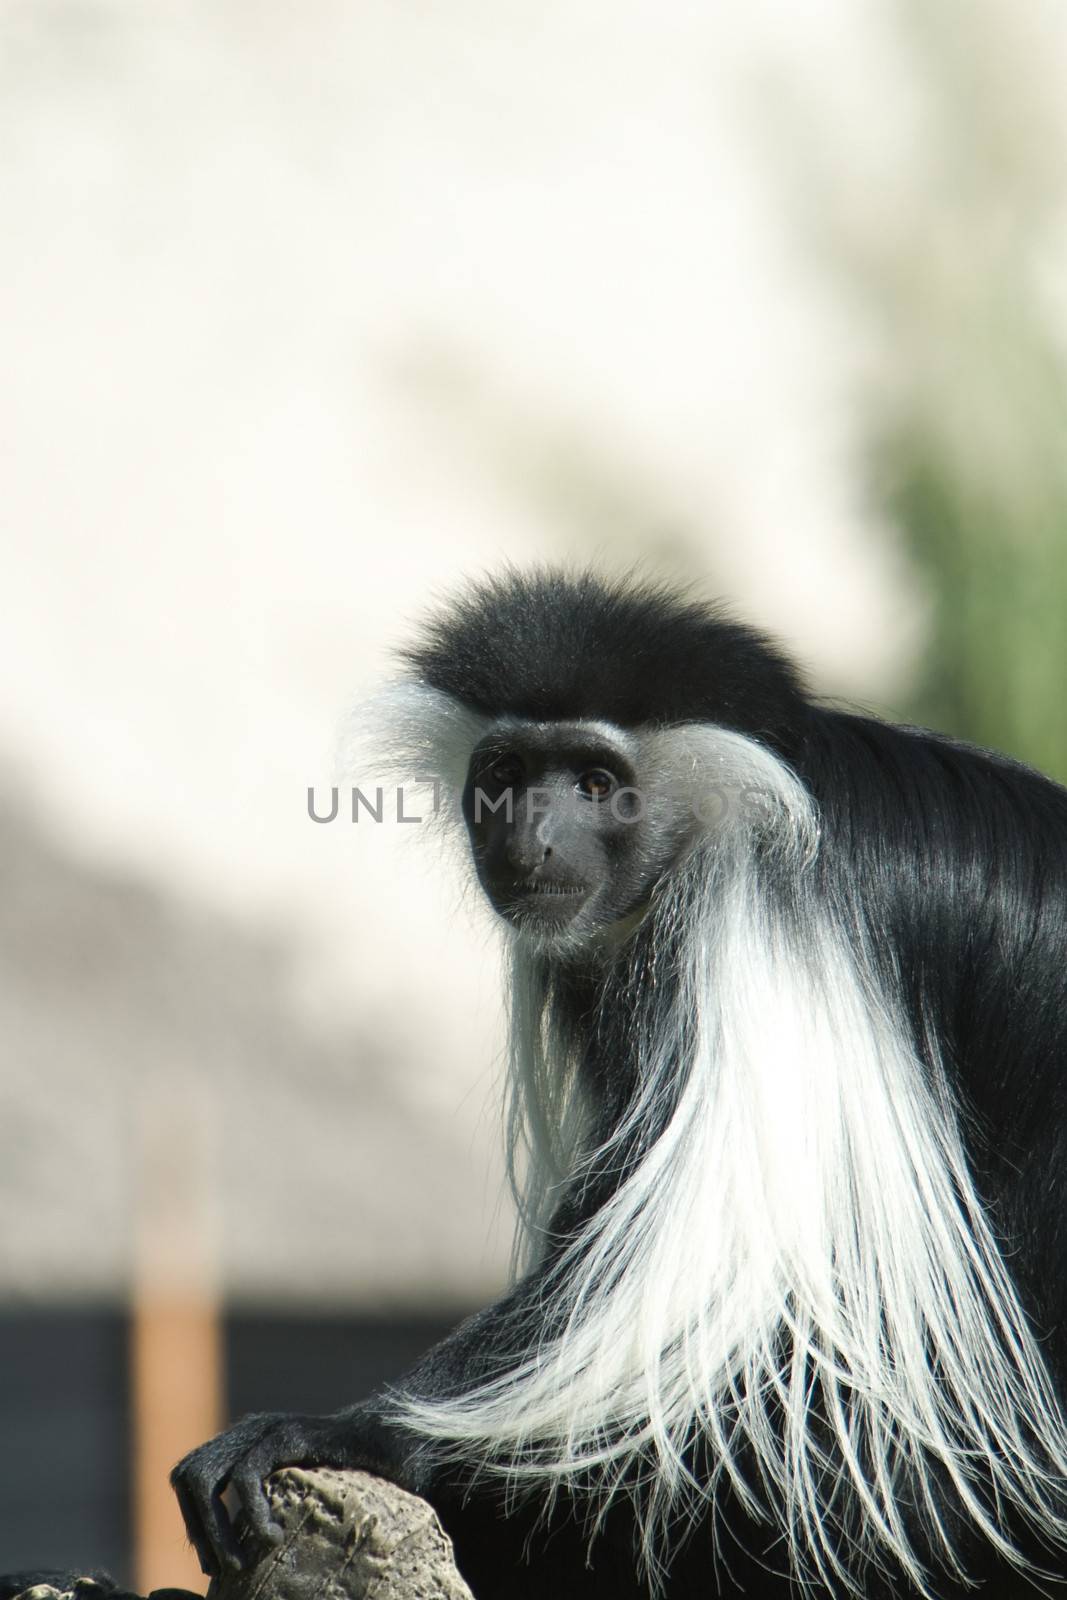 Black And White Colobus monkey by CelsoDiniz